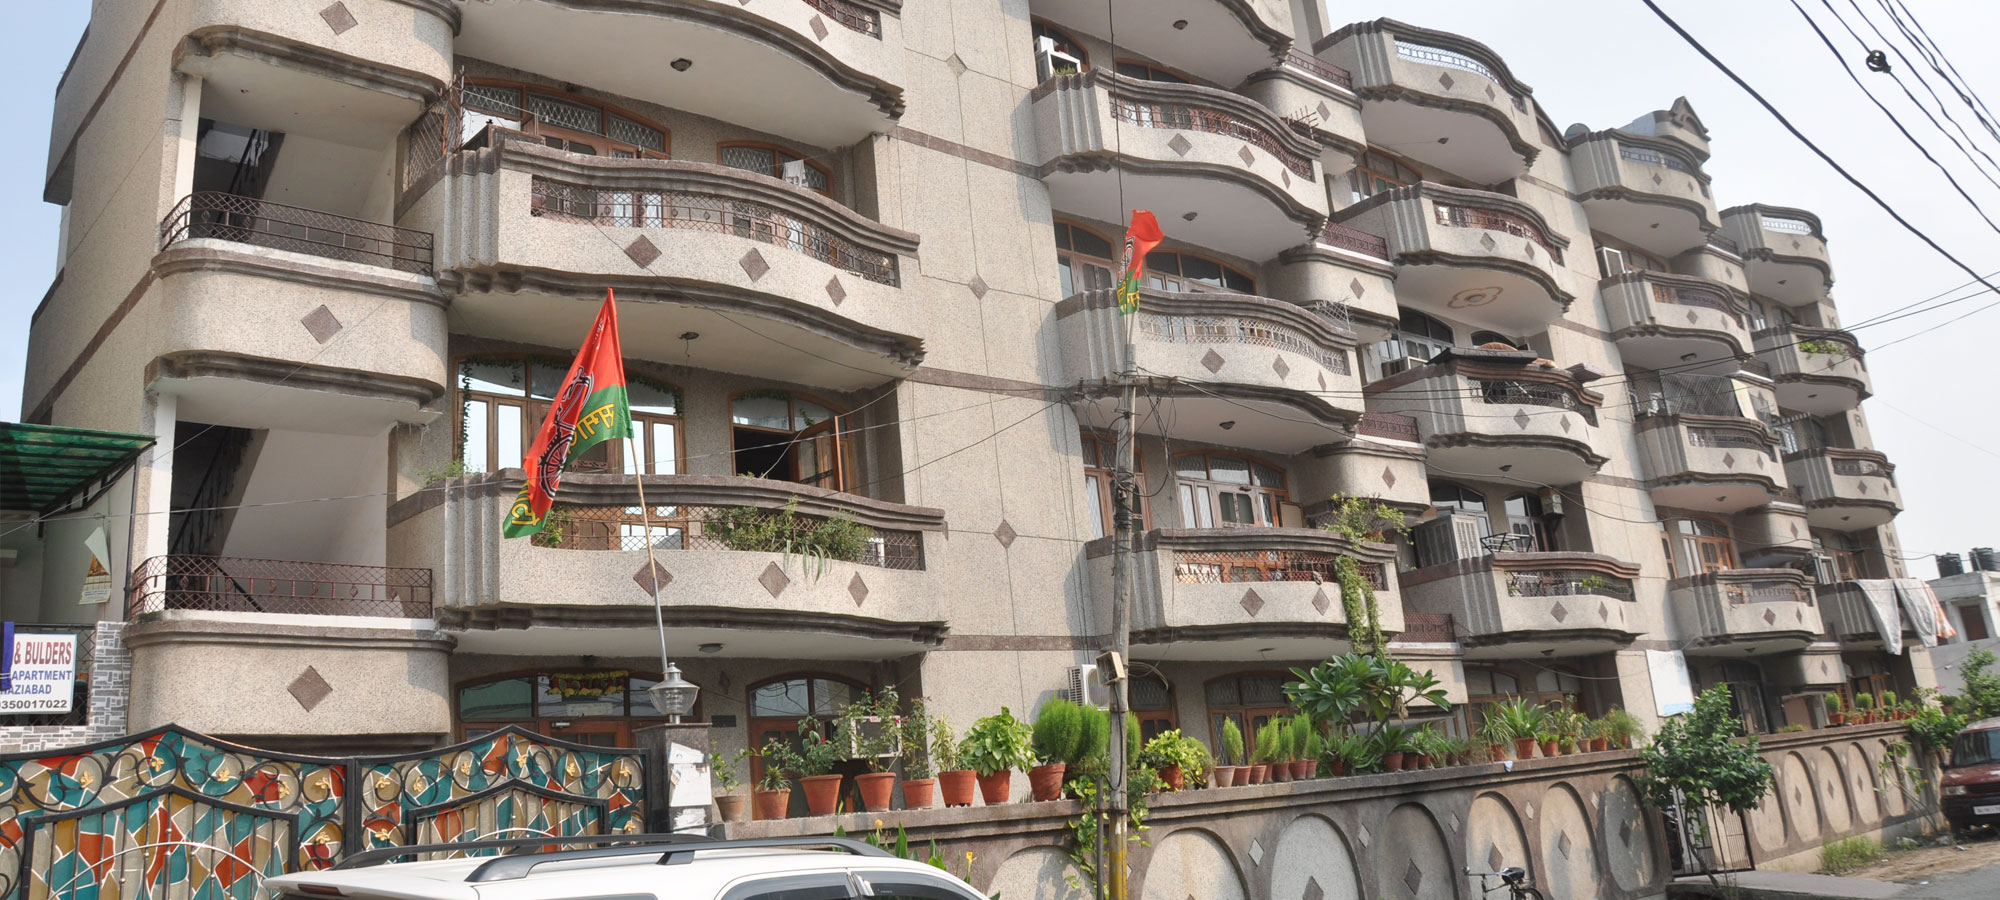 SVP Krishna Apartments Project Deails